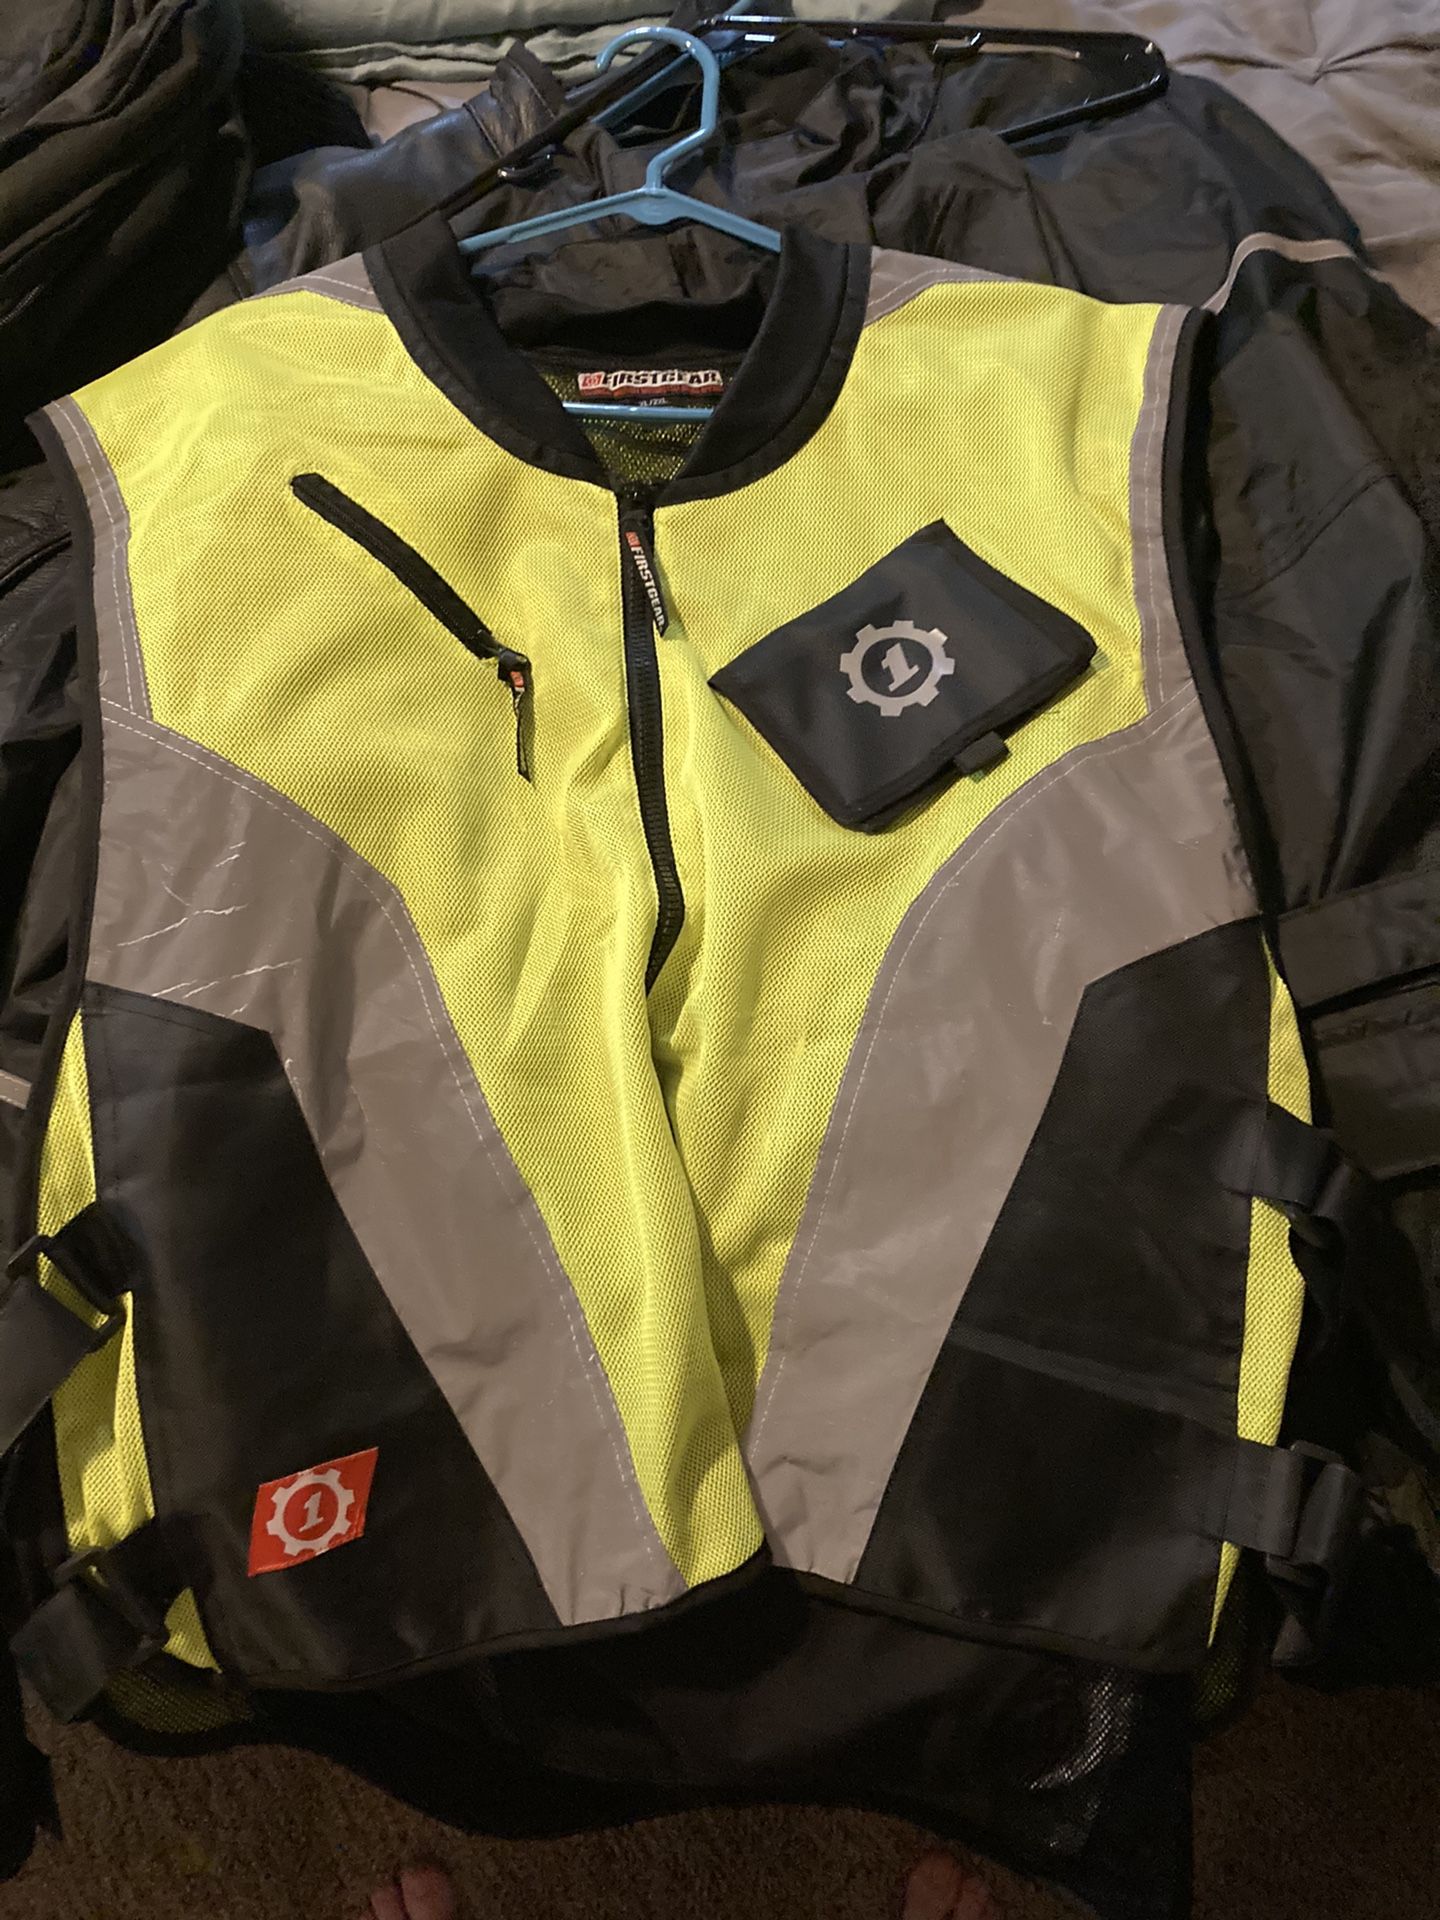 Motorcycle Safety / Reflective Riding Vest - Military Spec